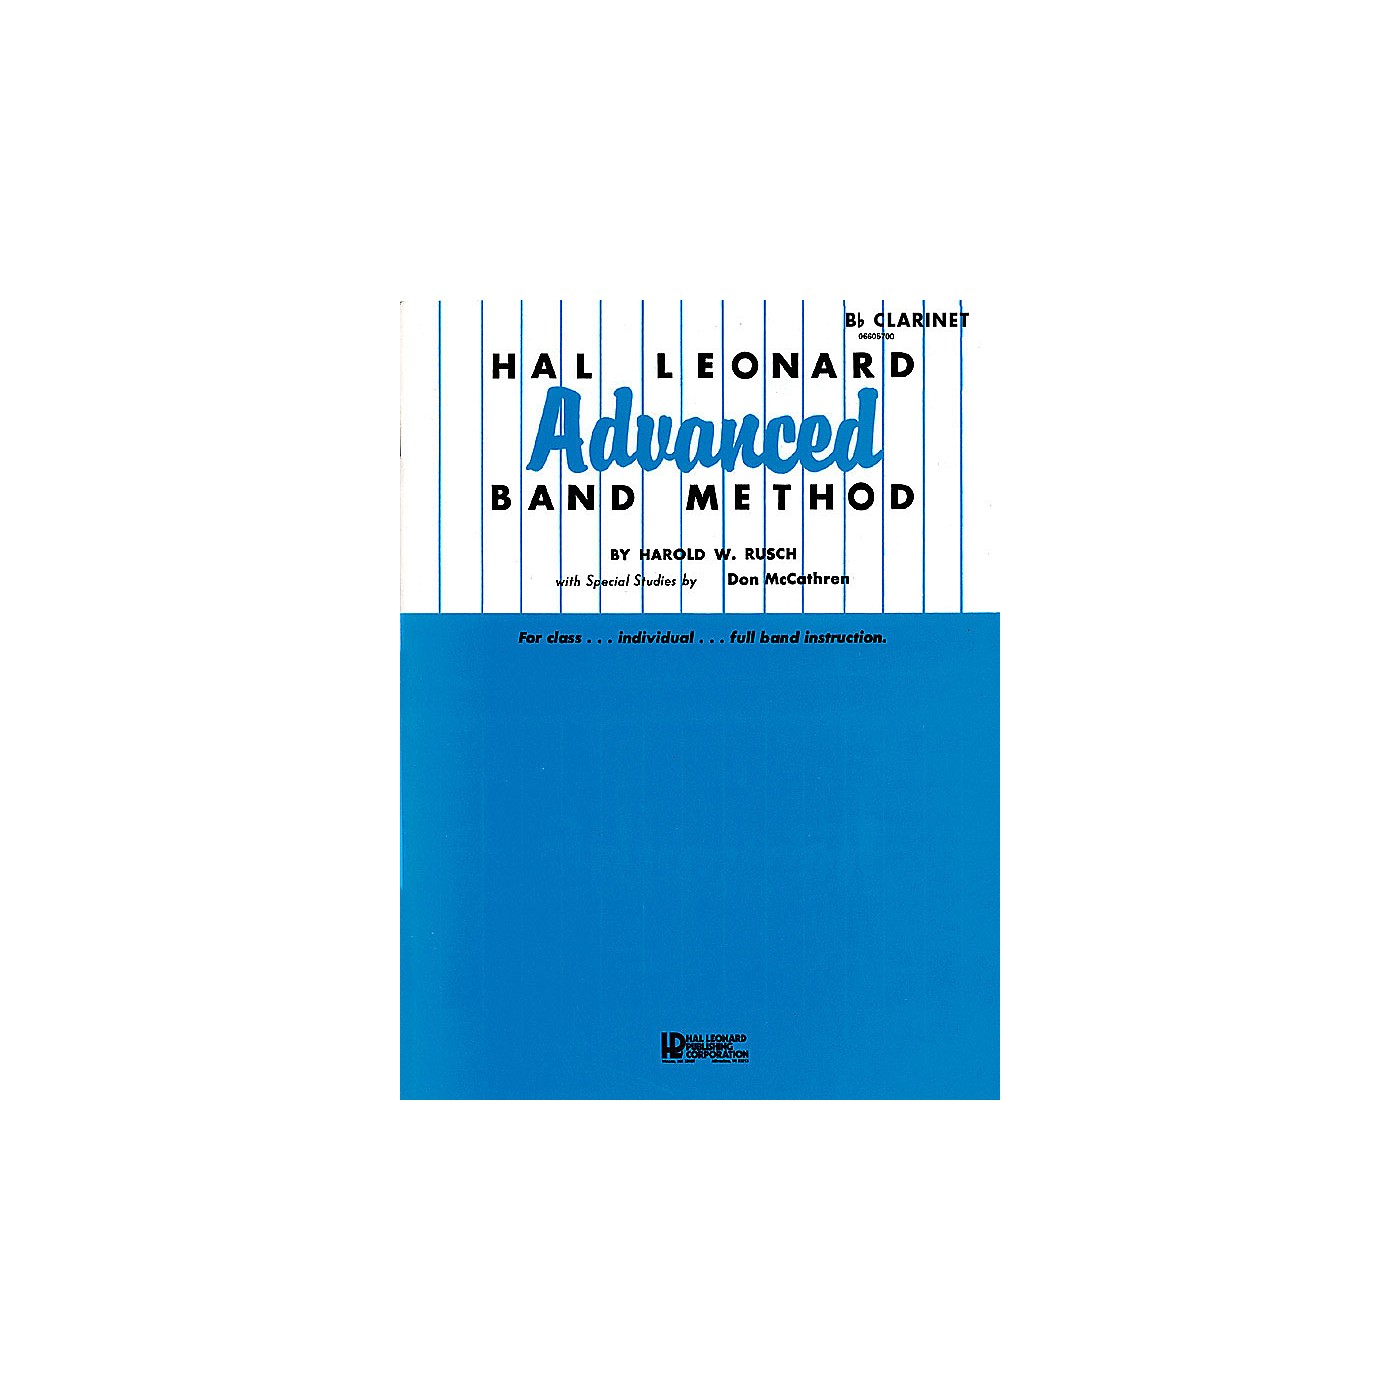 Hal Leonard Hal Leonard Advanced Band Method (Oboe) Advanced Band Method Series Composed by Harold W. Rusch thumbnail